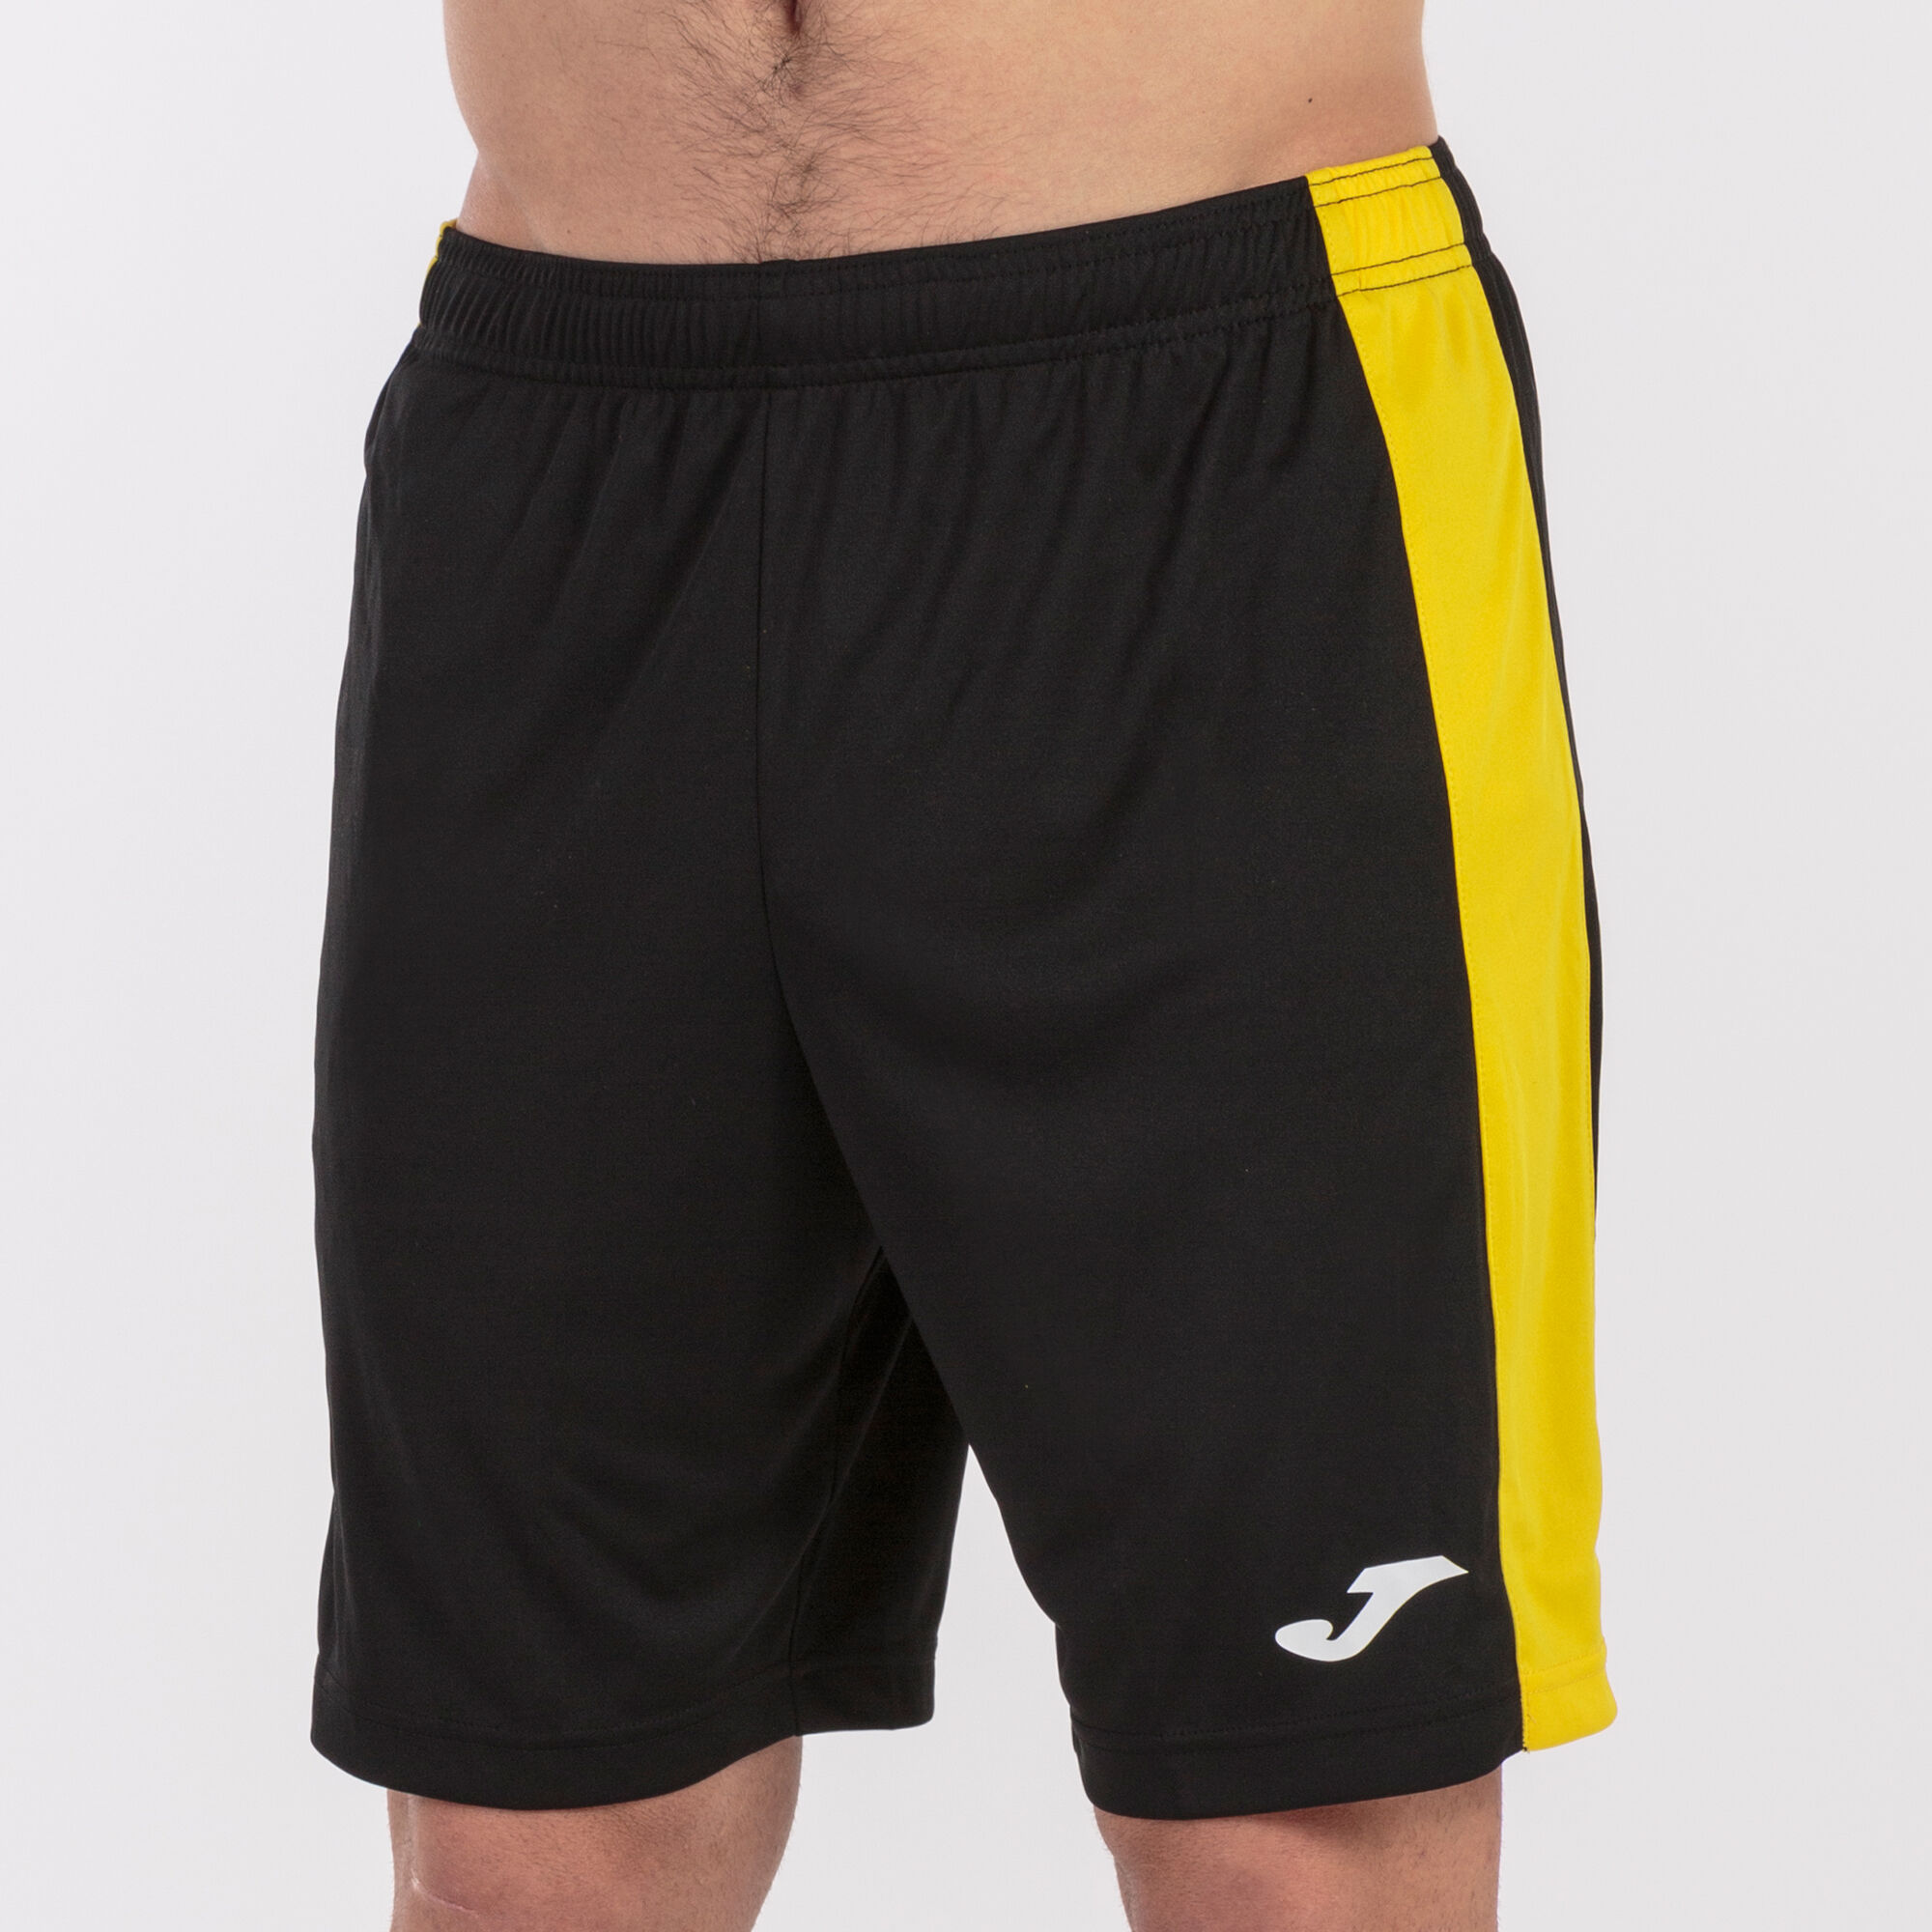 Pantaloni lungi pană bărbaȚi Maxi negru galben